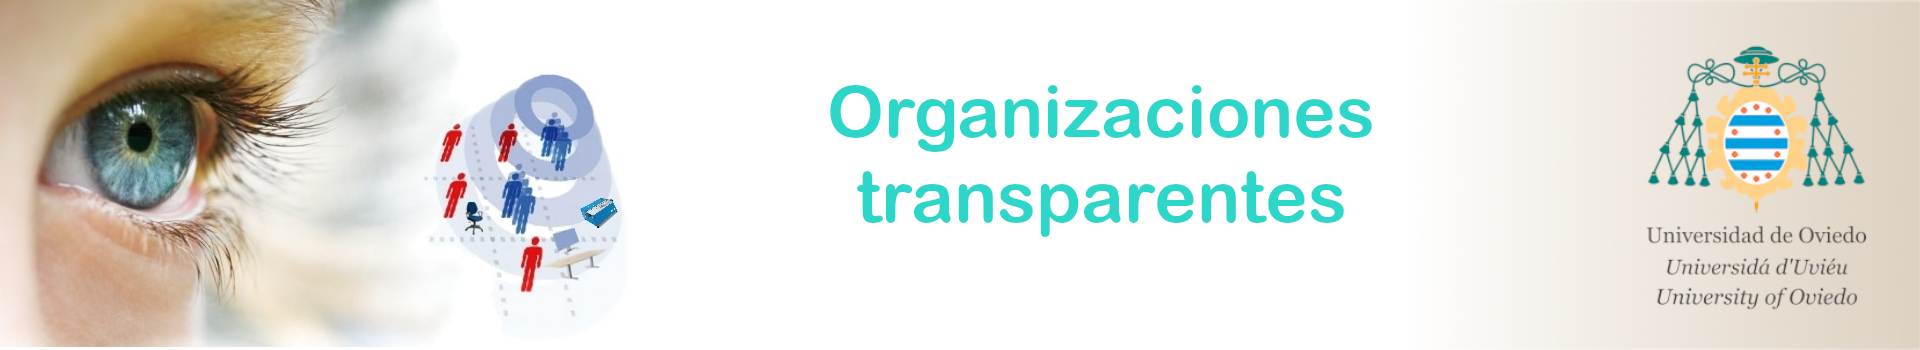 Transparent organizations